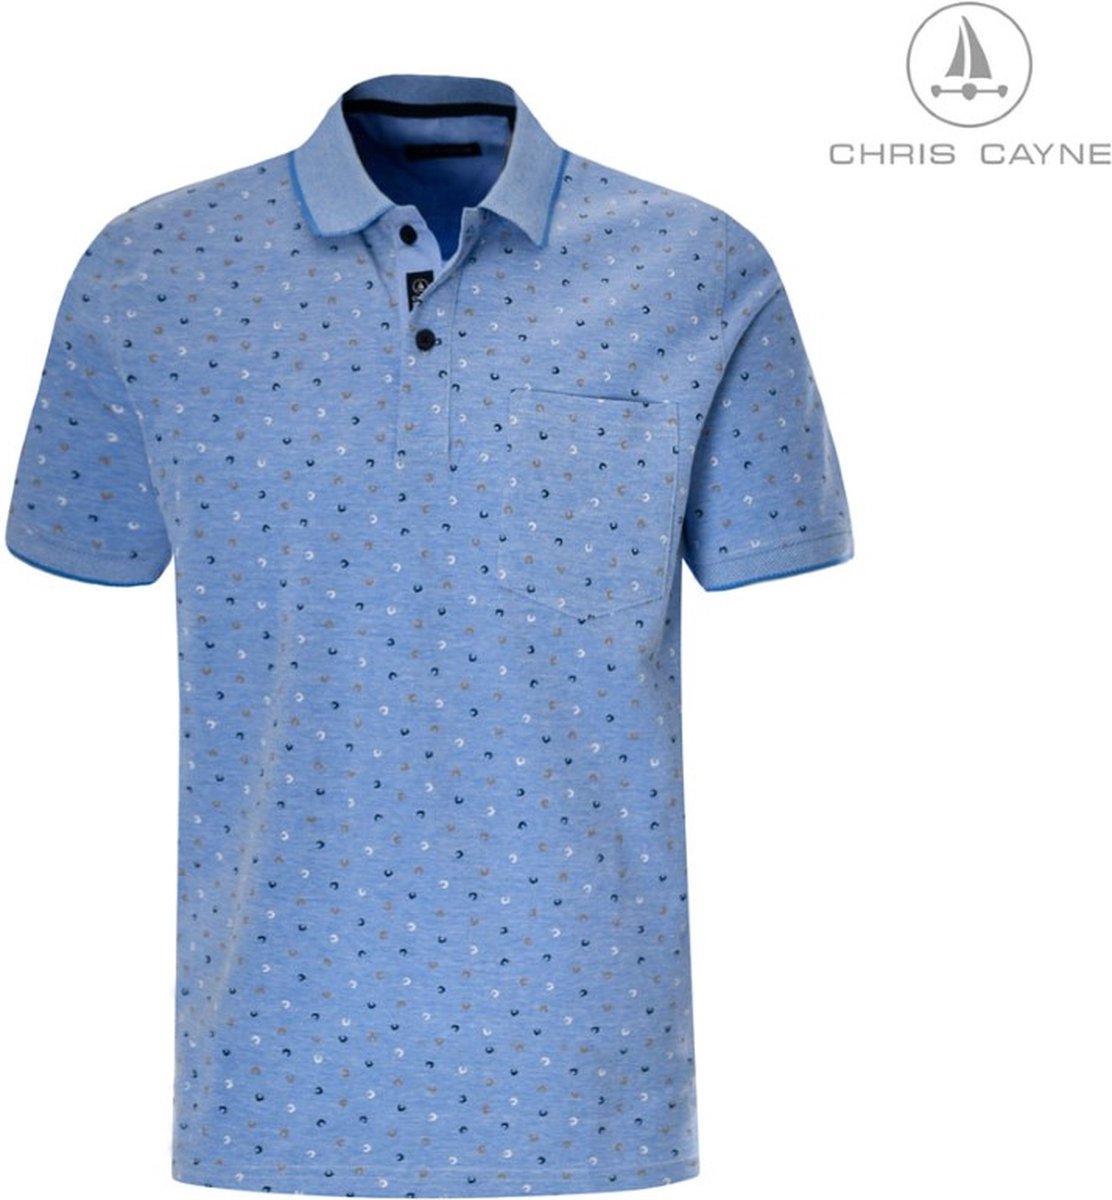 Chris Cayne heren poloshirt - polo heren - 3052 - blauw print - korte mouwen - maat 4XL